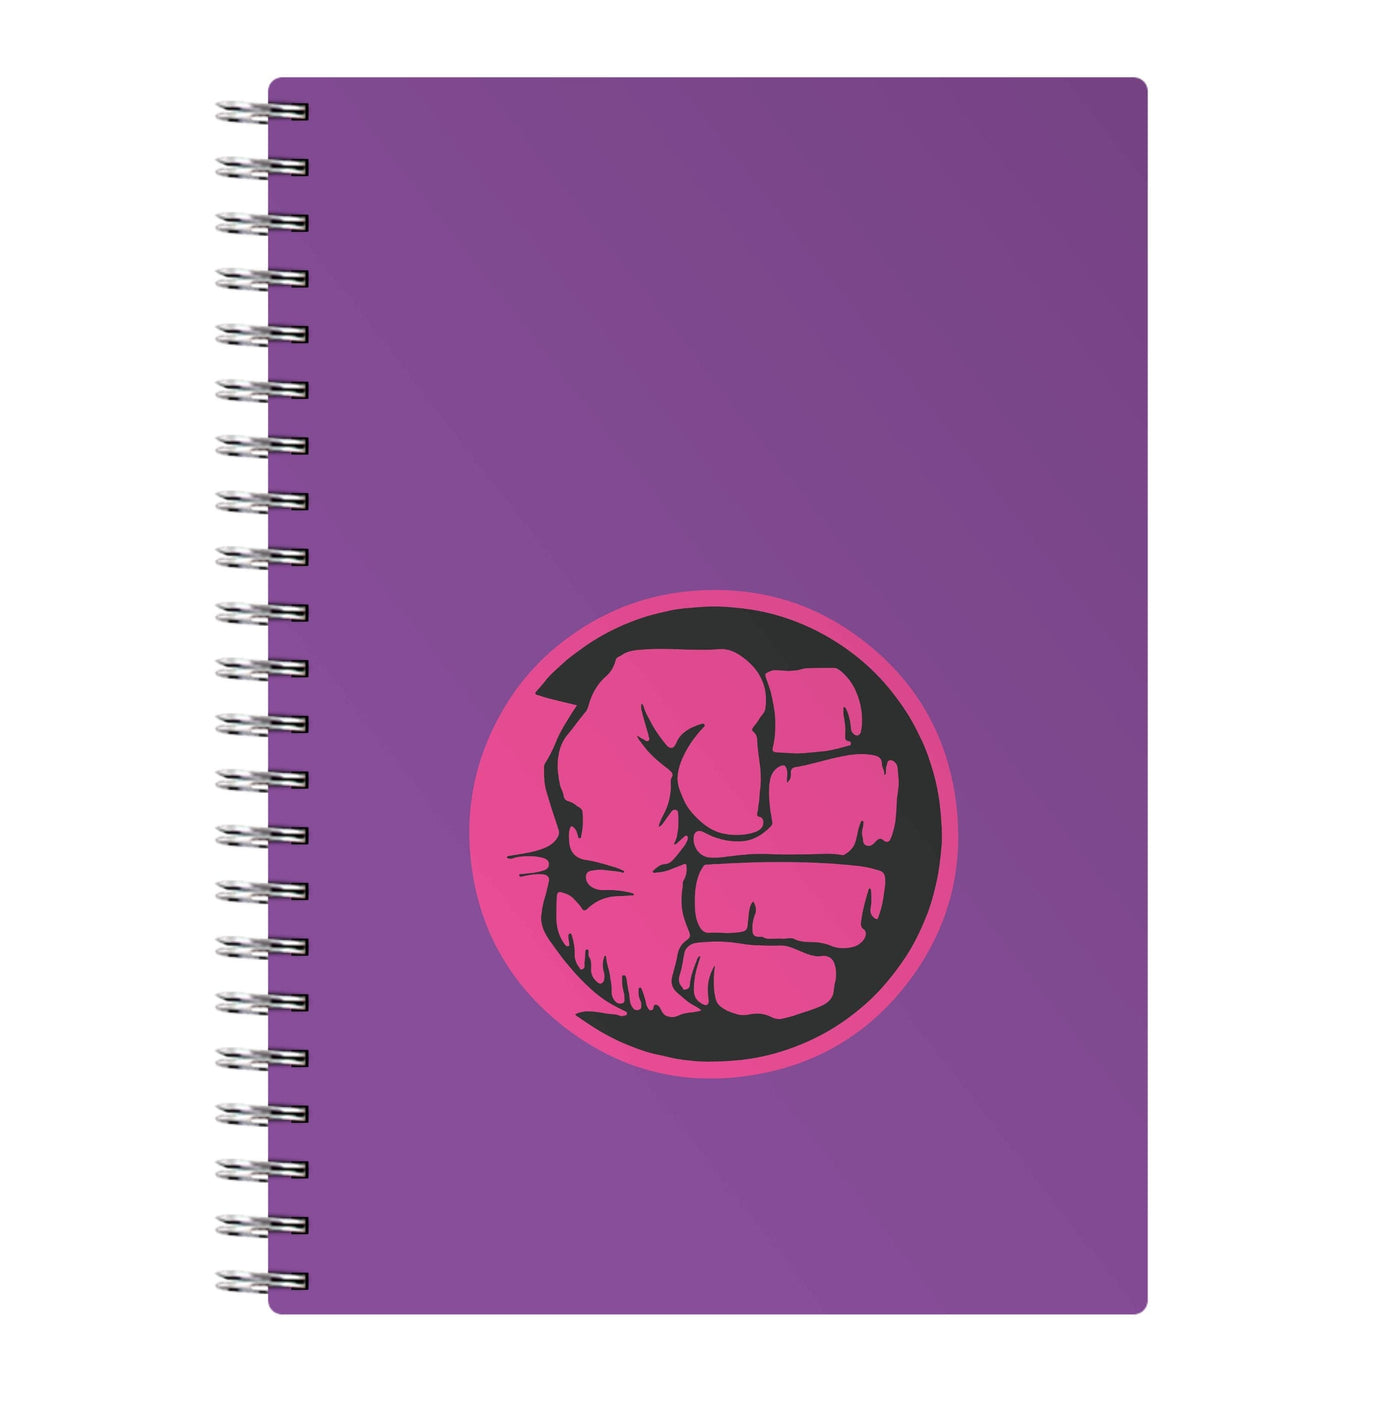 Fist - She Hulk Notebook